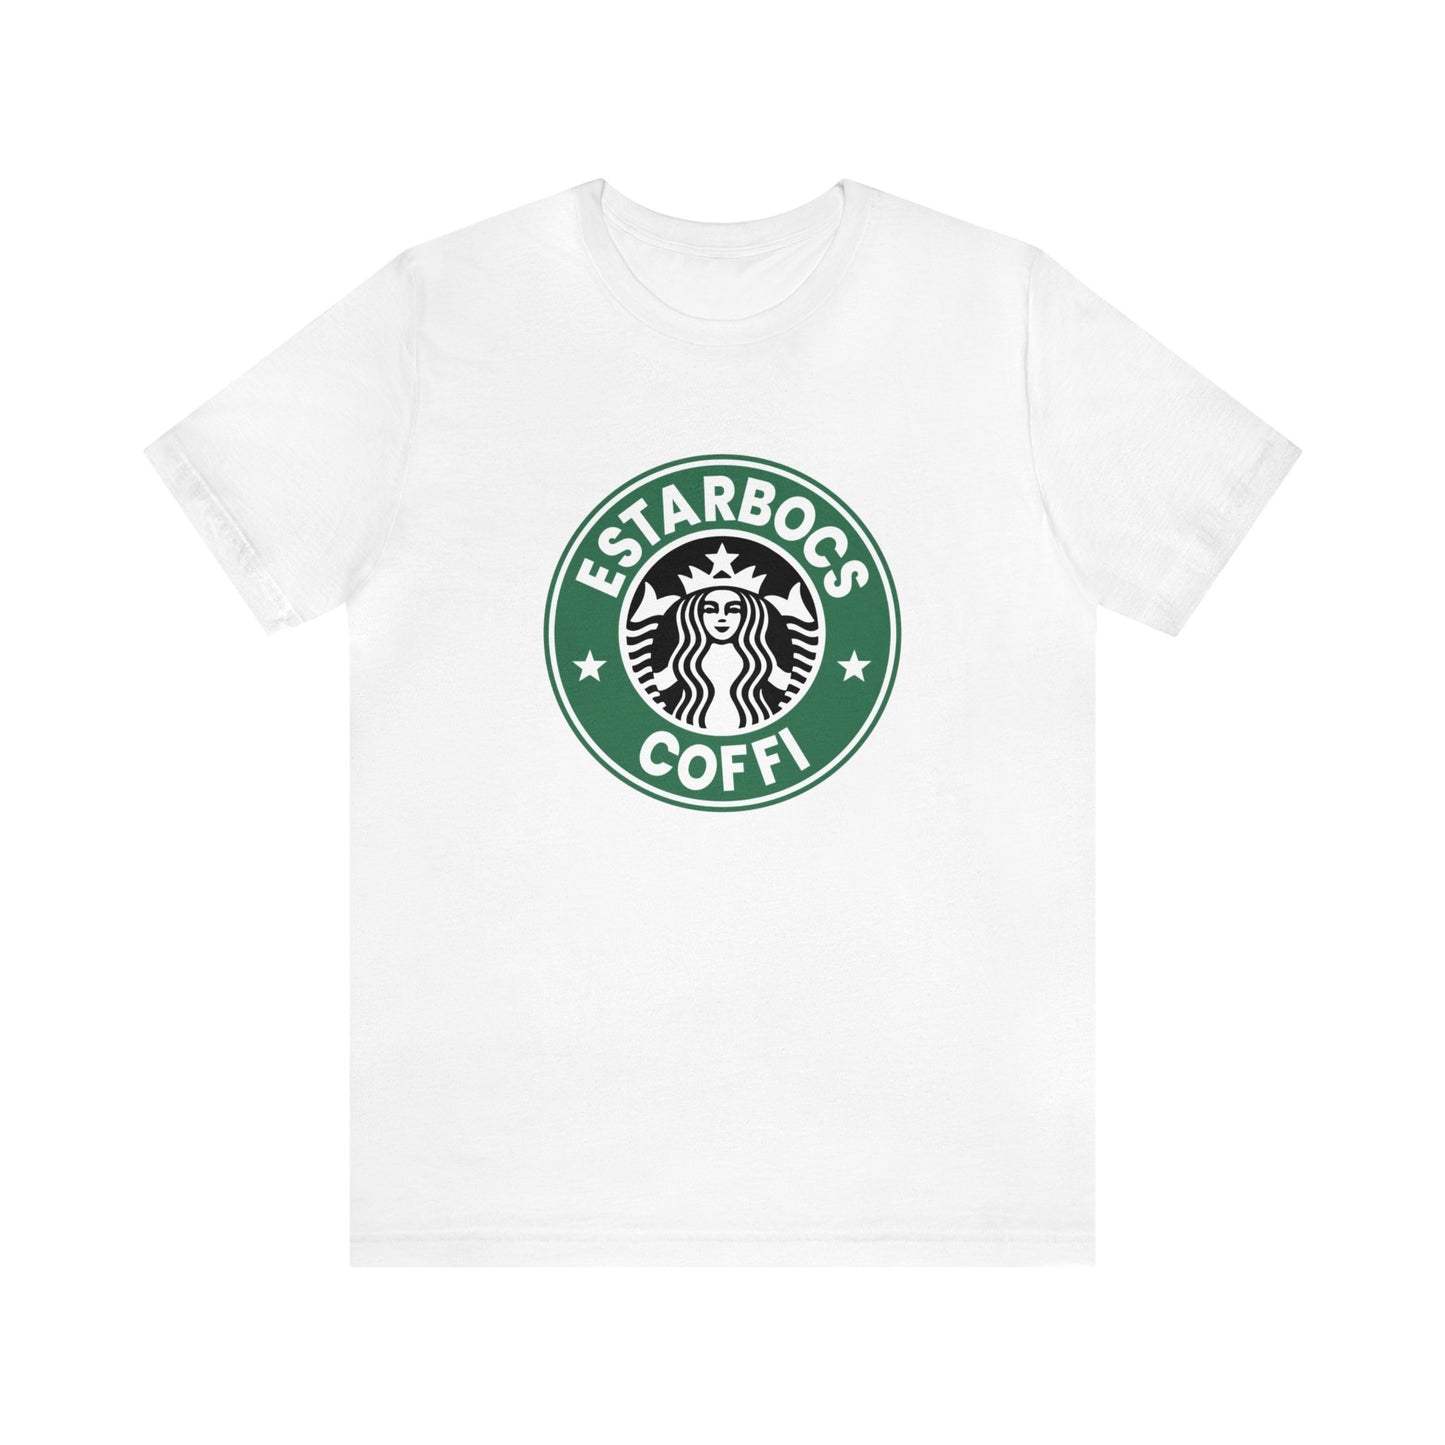 Estarbocs Coffi T-Shirt - Funny Parody Starbucks Coffee T-Shirt